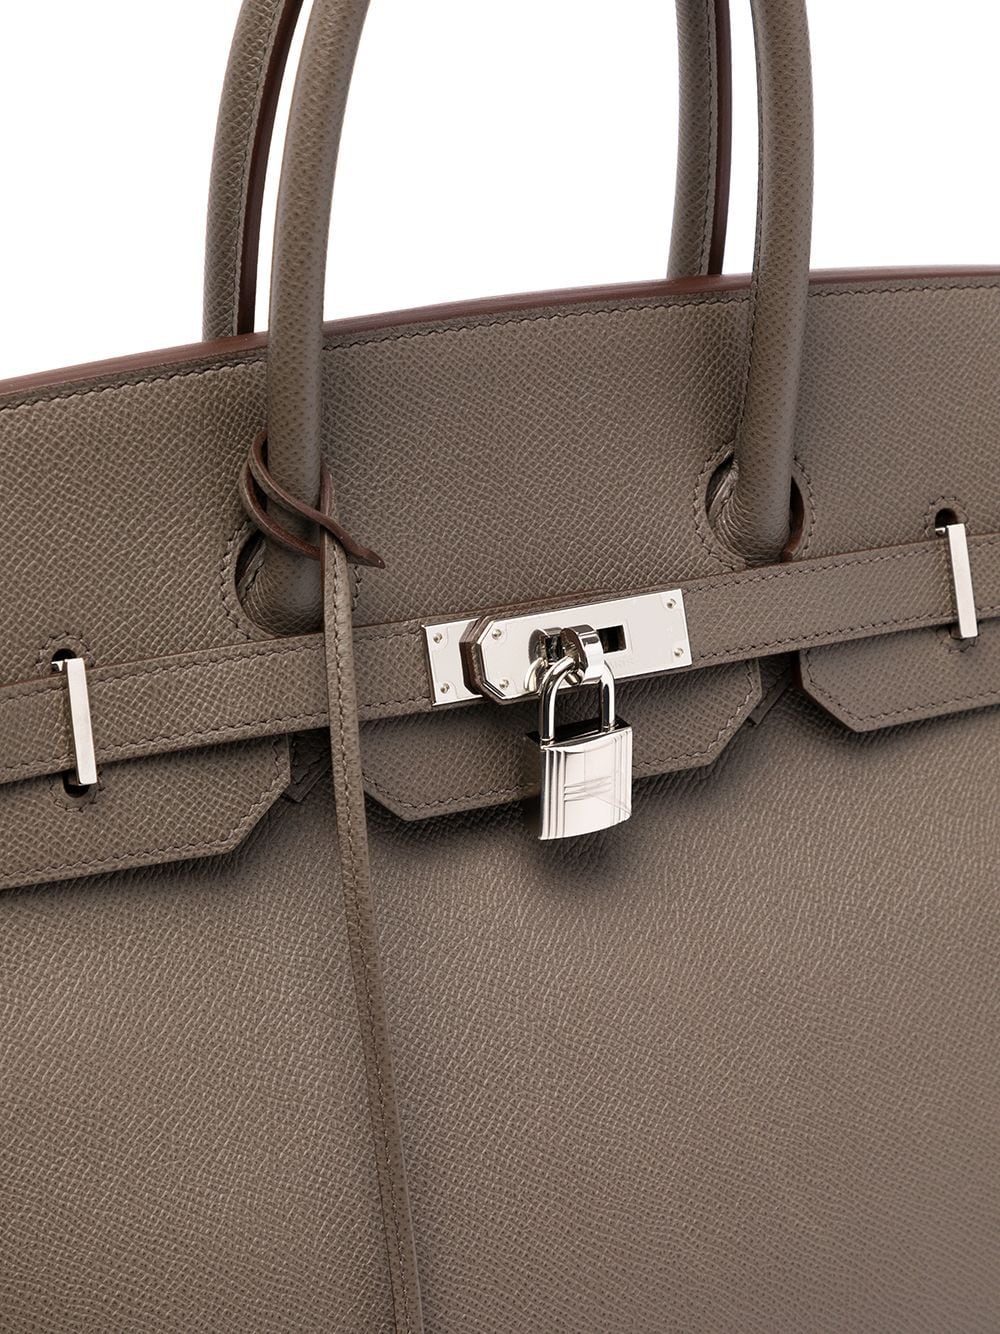 Hermès 2018 pre-owned Birkin 35 Bag - Farfetch